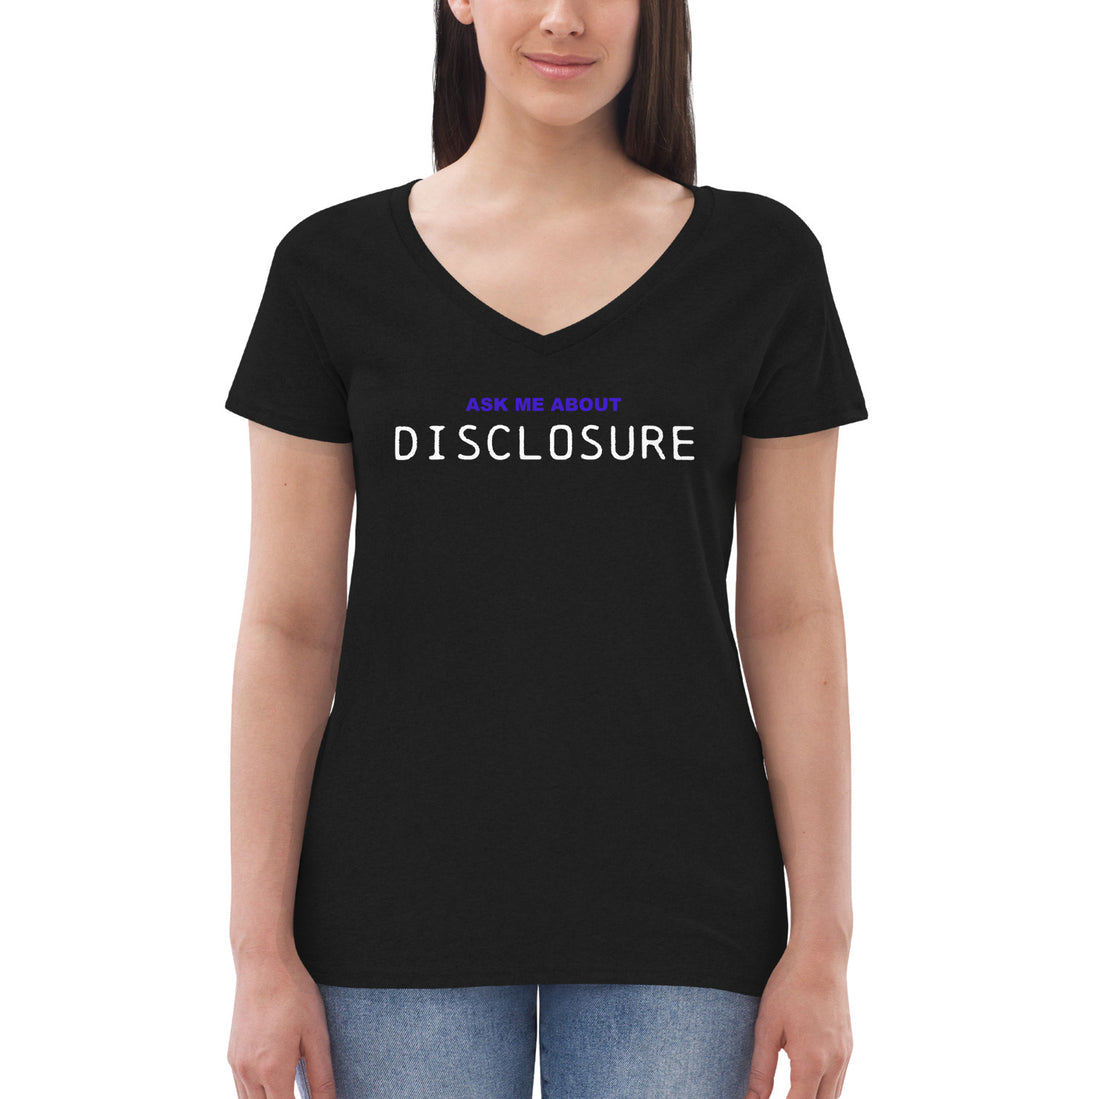 DISCLOSURE - Women’s V-neck T-shirt